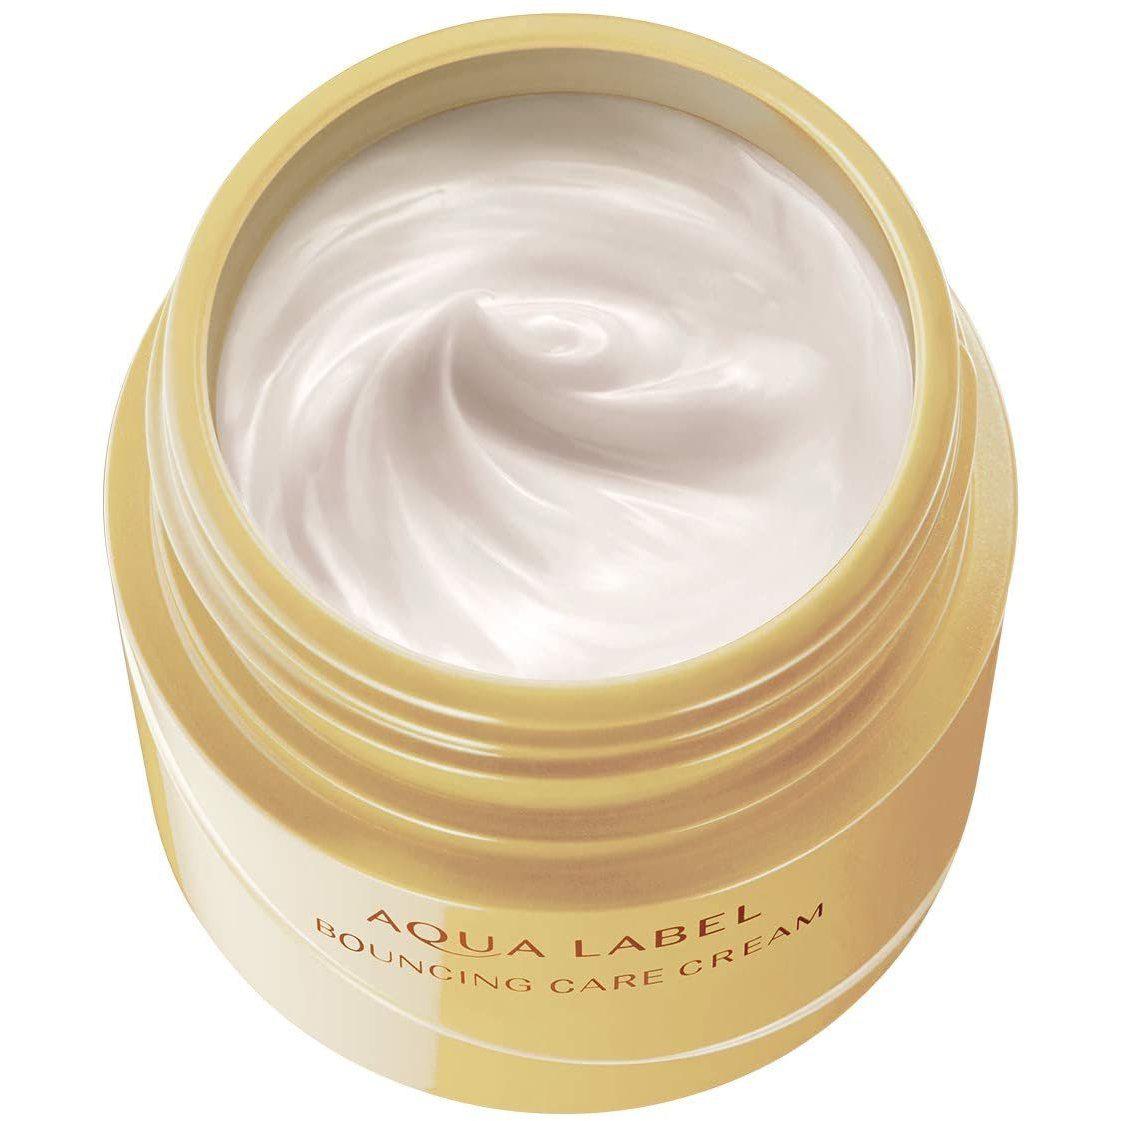 Shiseido Aqualabel Anti-Ageing Bouncing Face Cream 50g